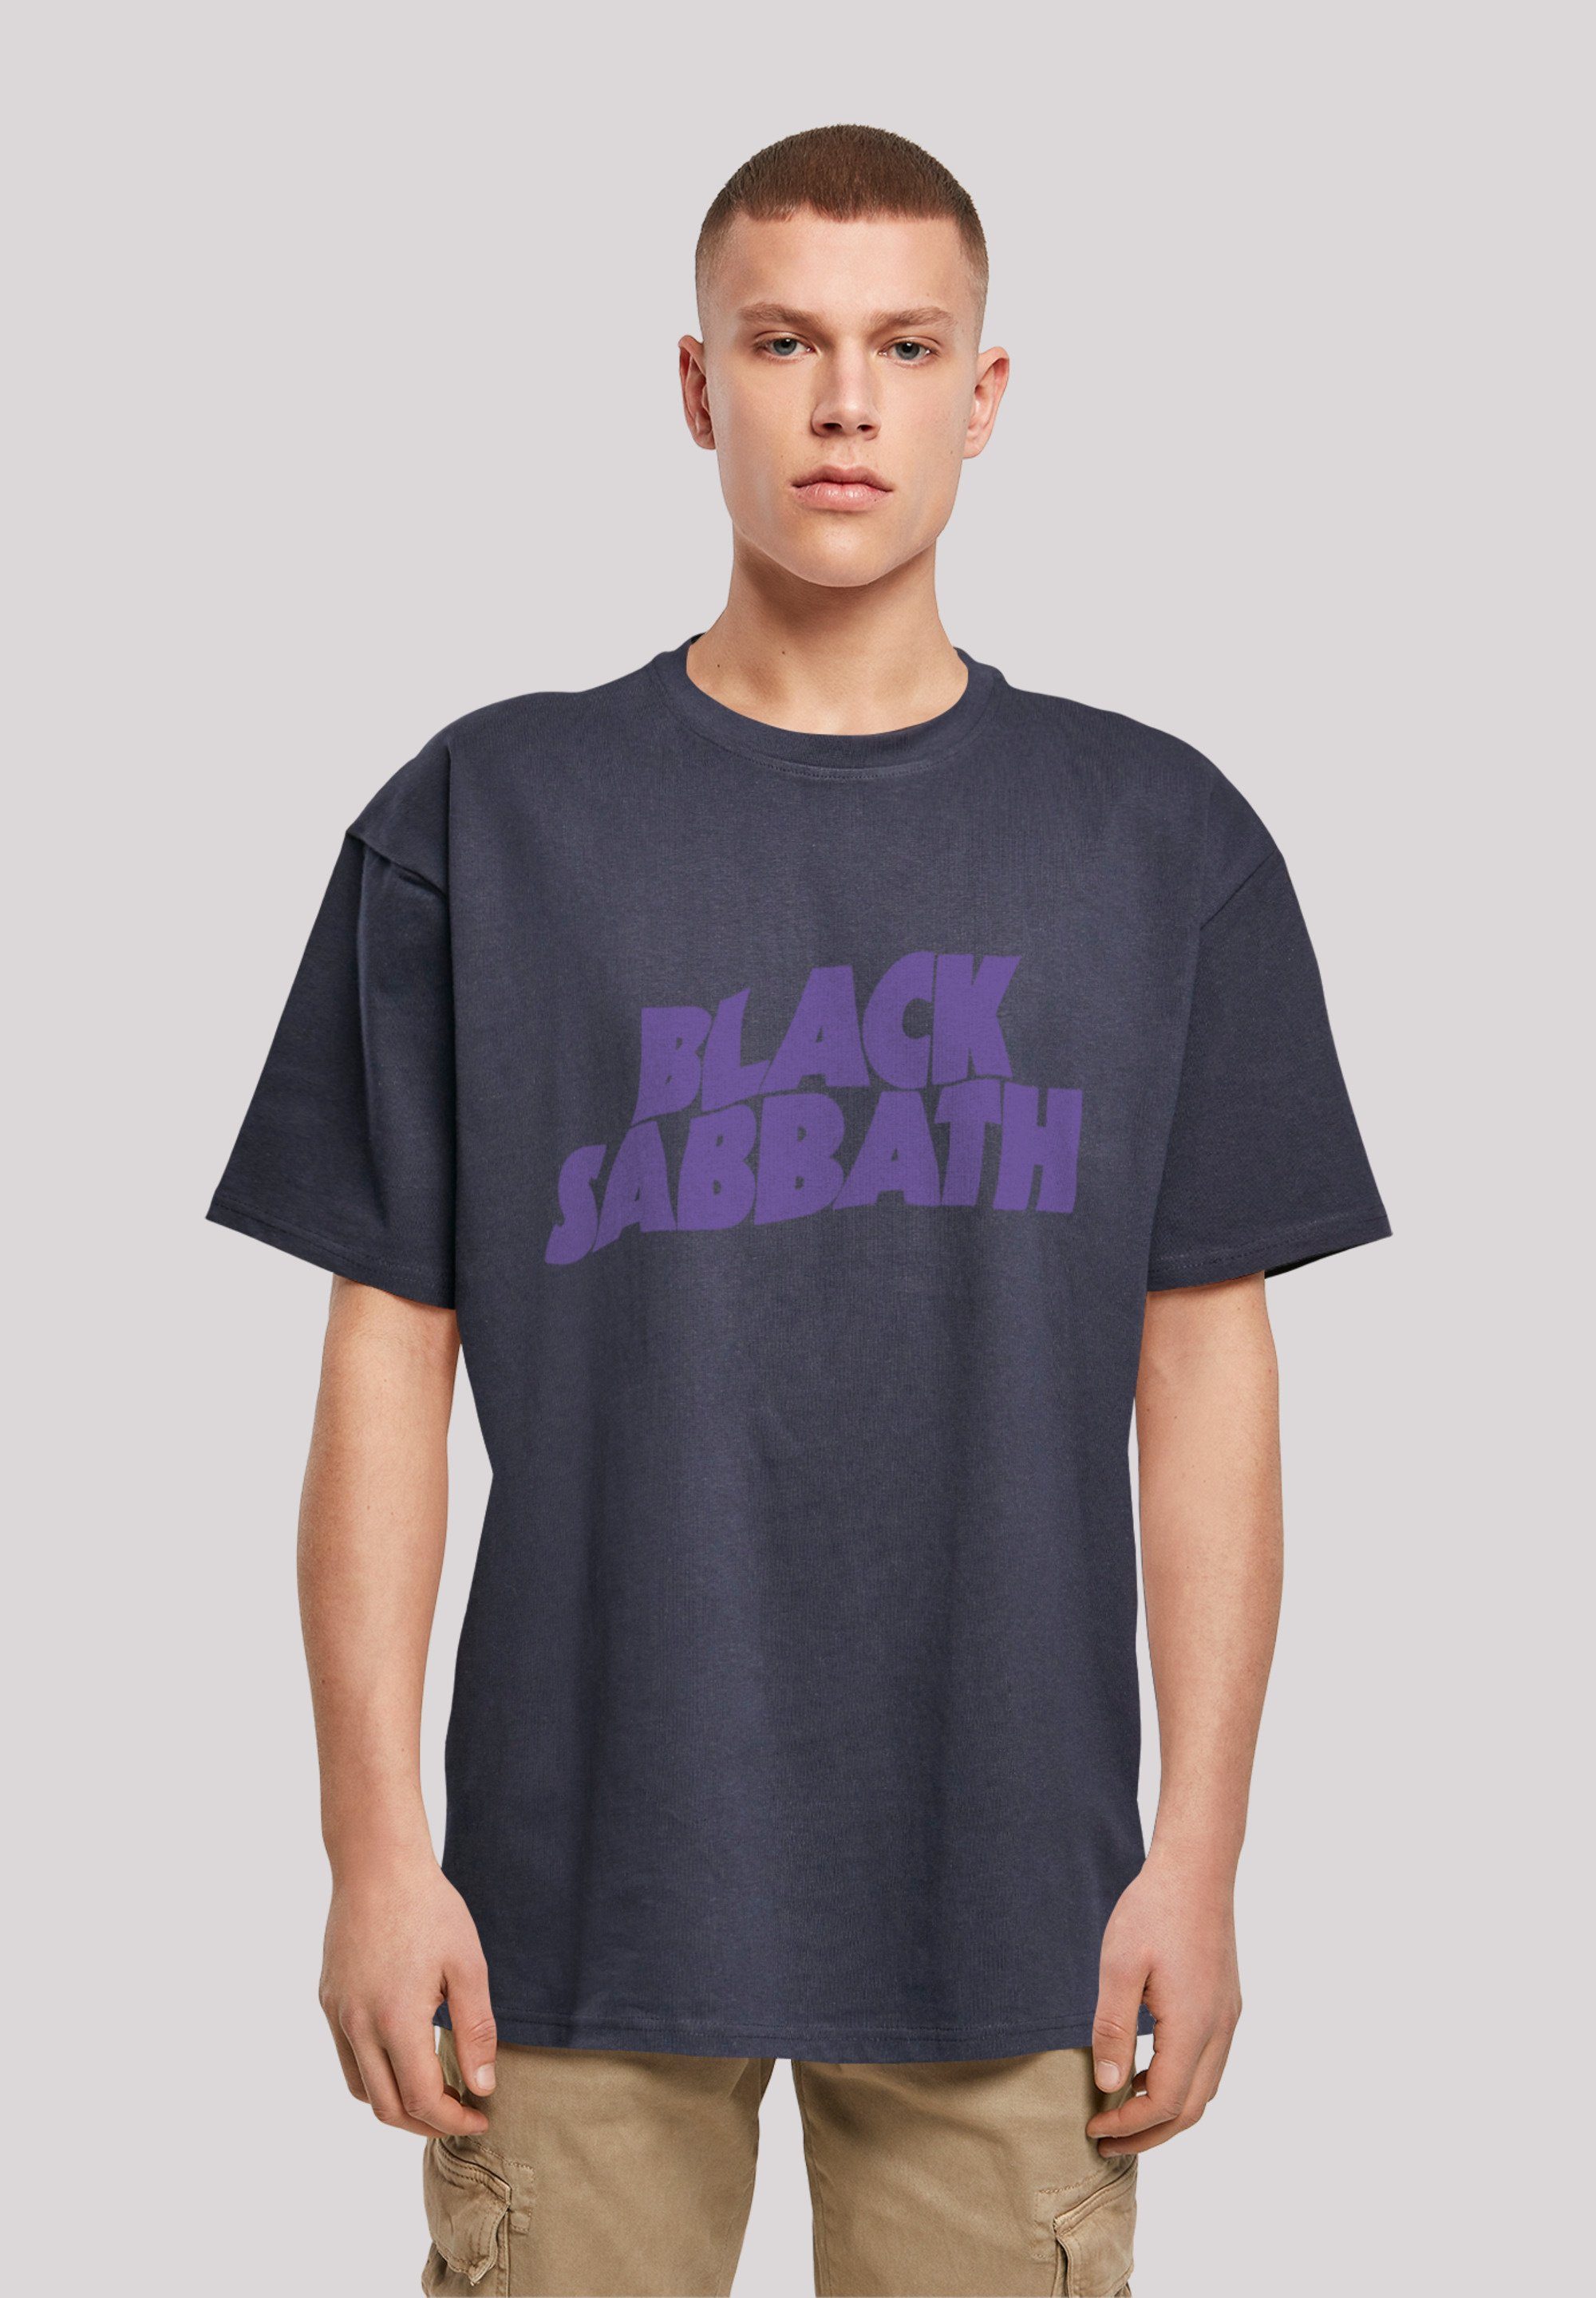 F4NT4STIC T-Shirt Black Sabbath Heavy Metal Band Wavy Logo Black Print navy